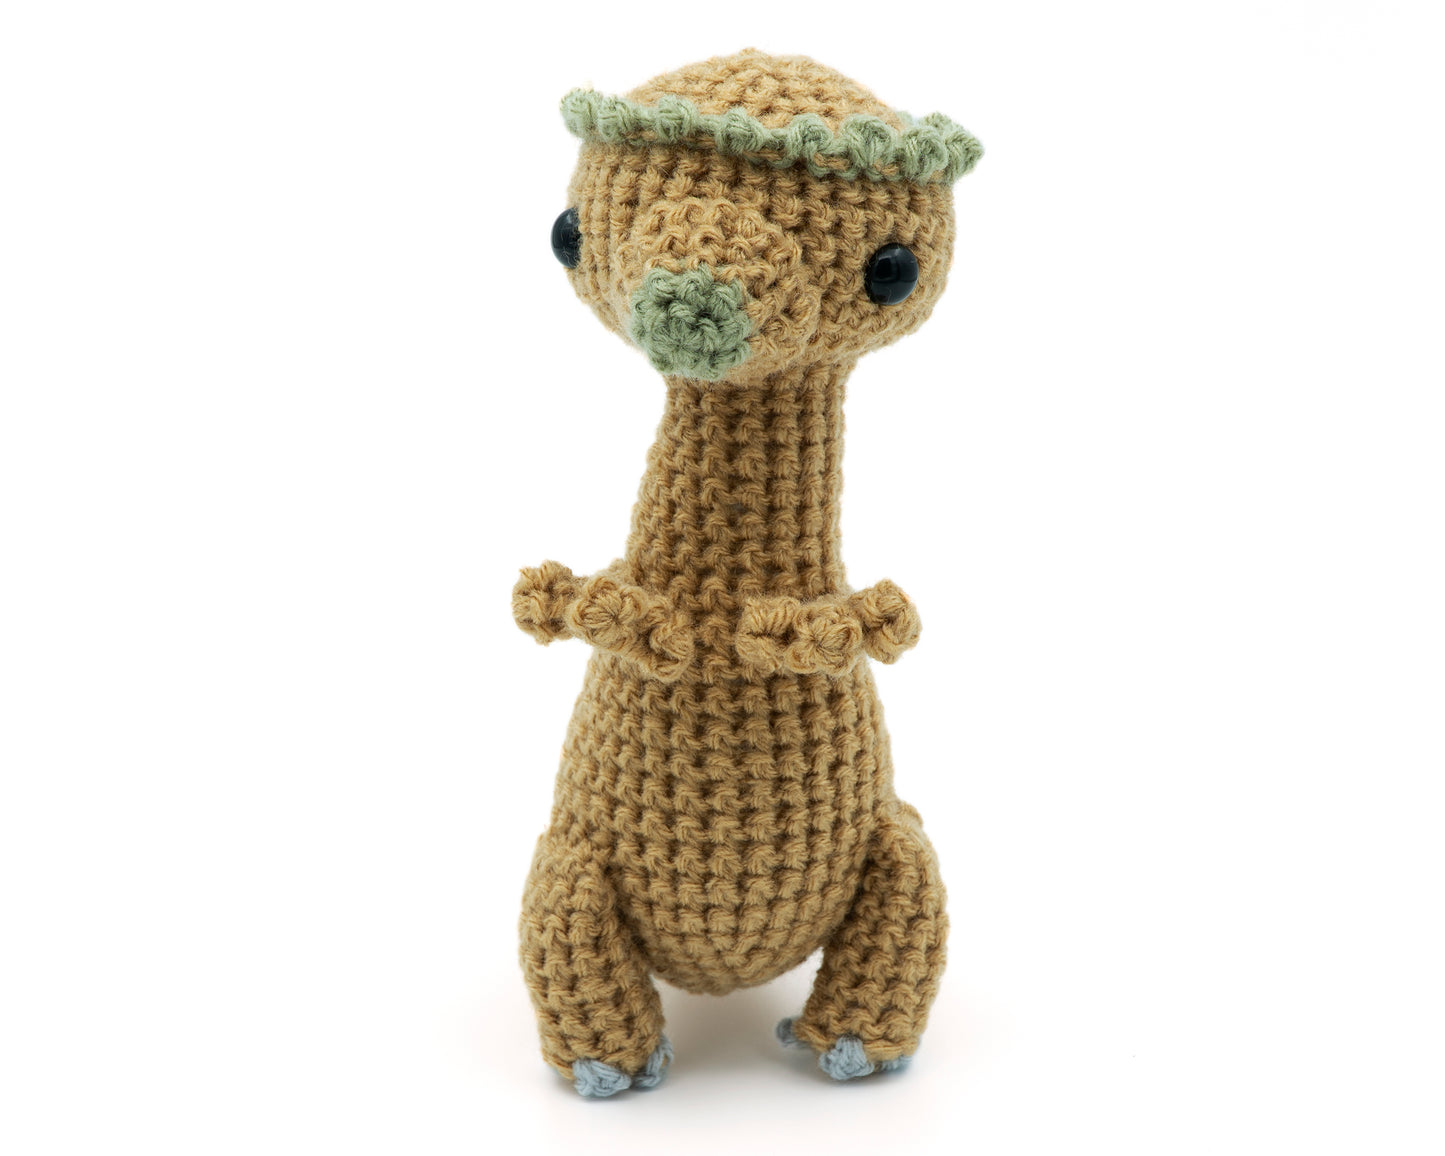 Crochet Pattern: Pachycephalosaurus